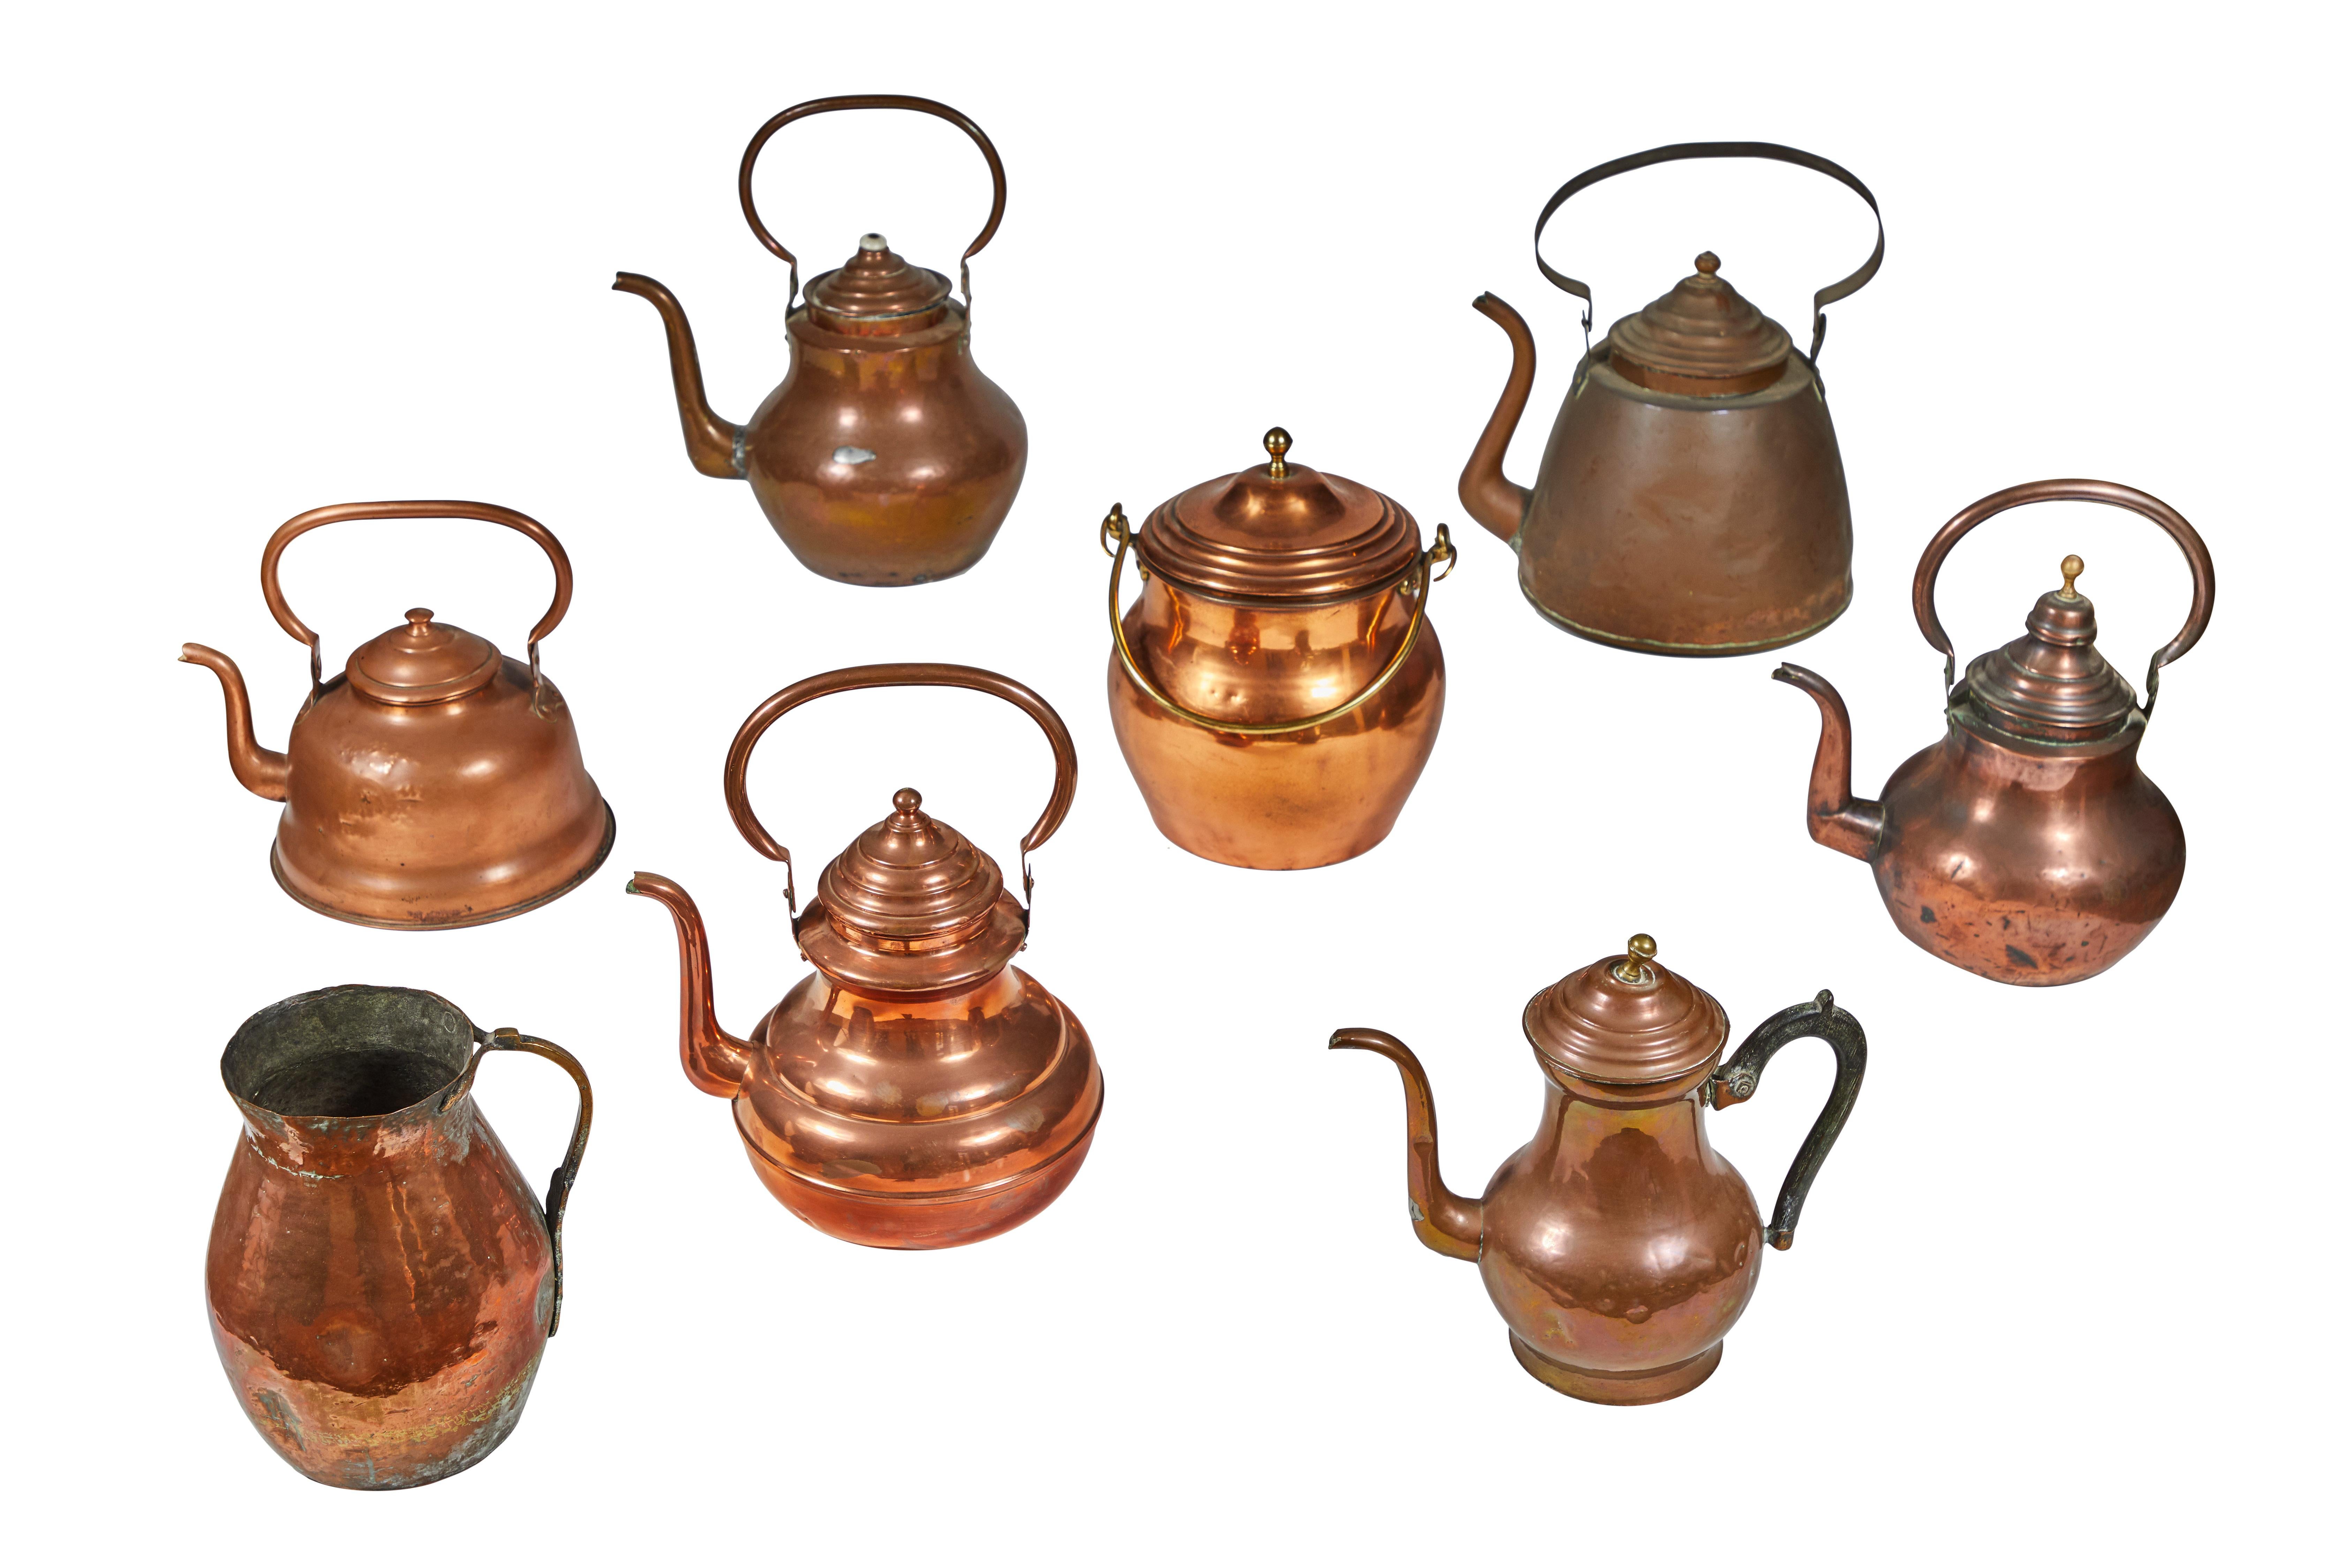 19th century French copper pot.